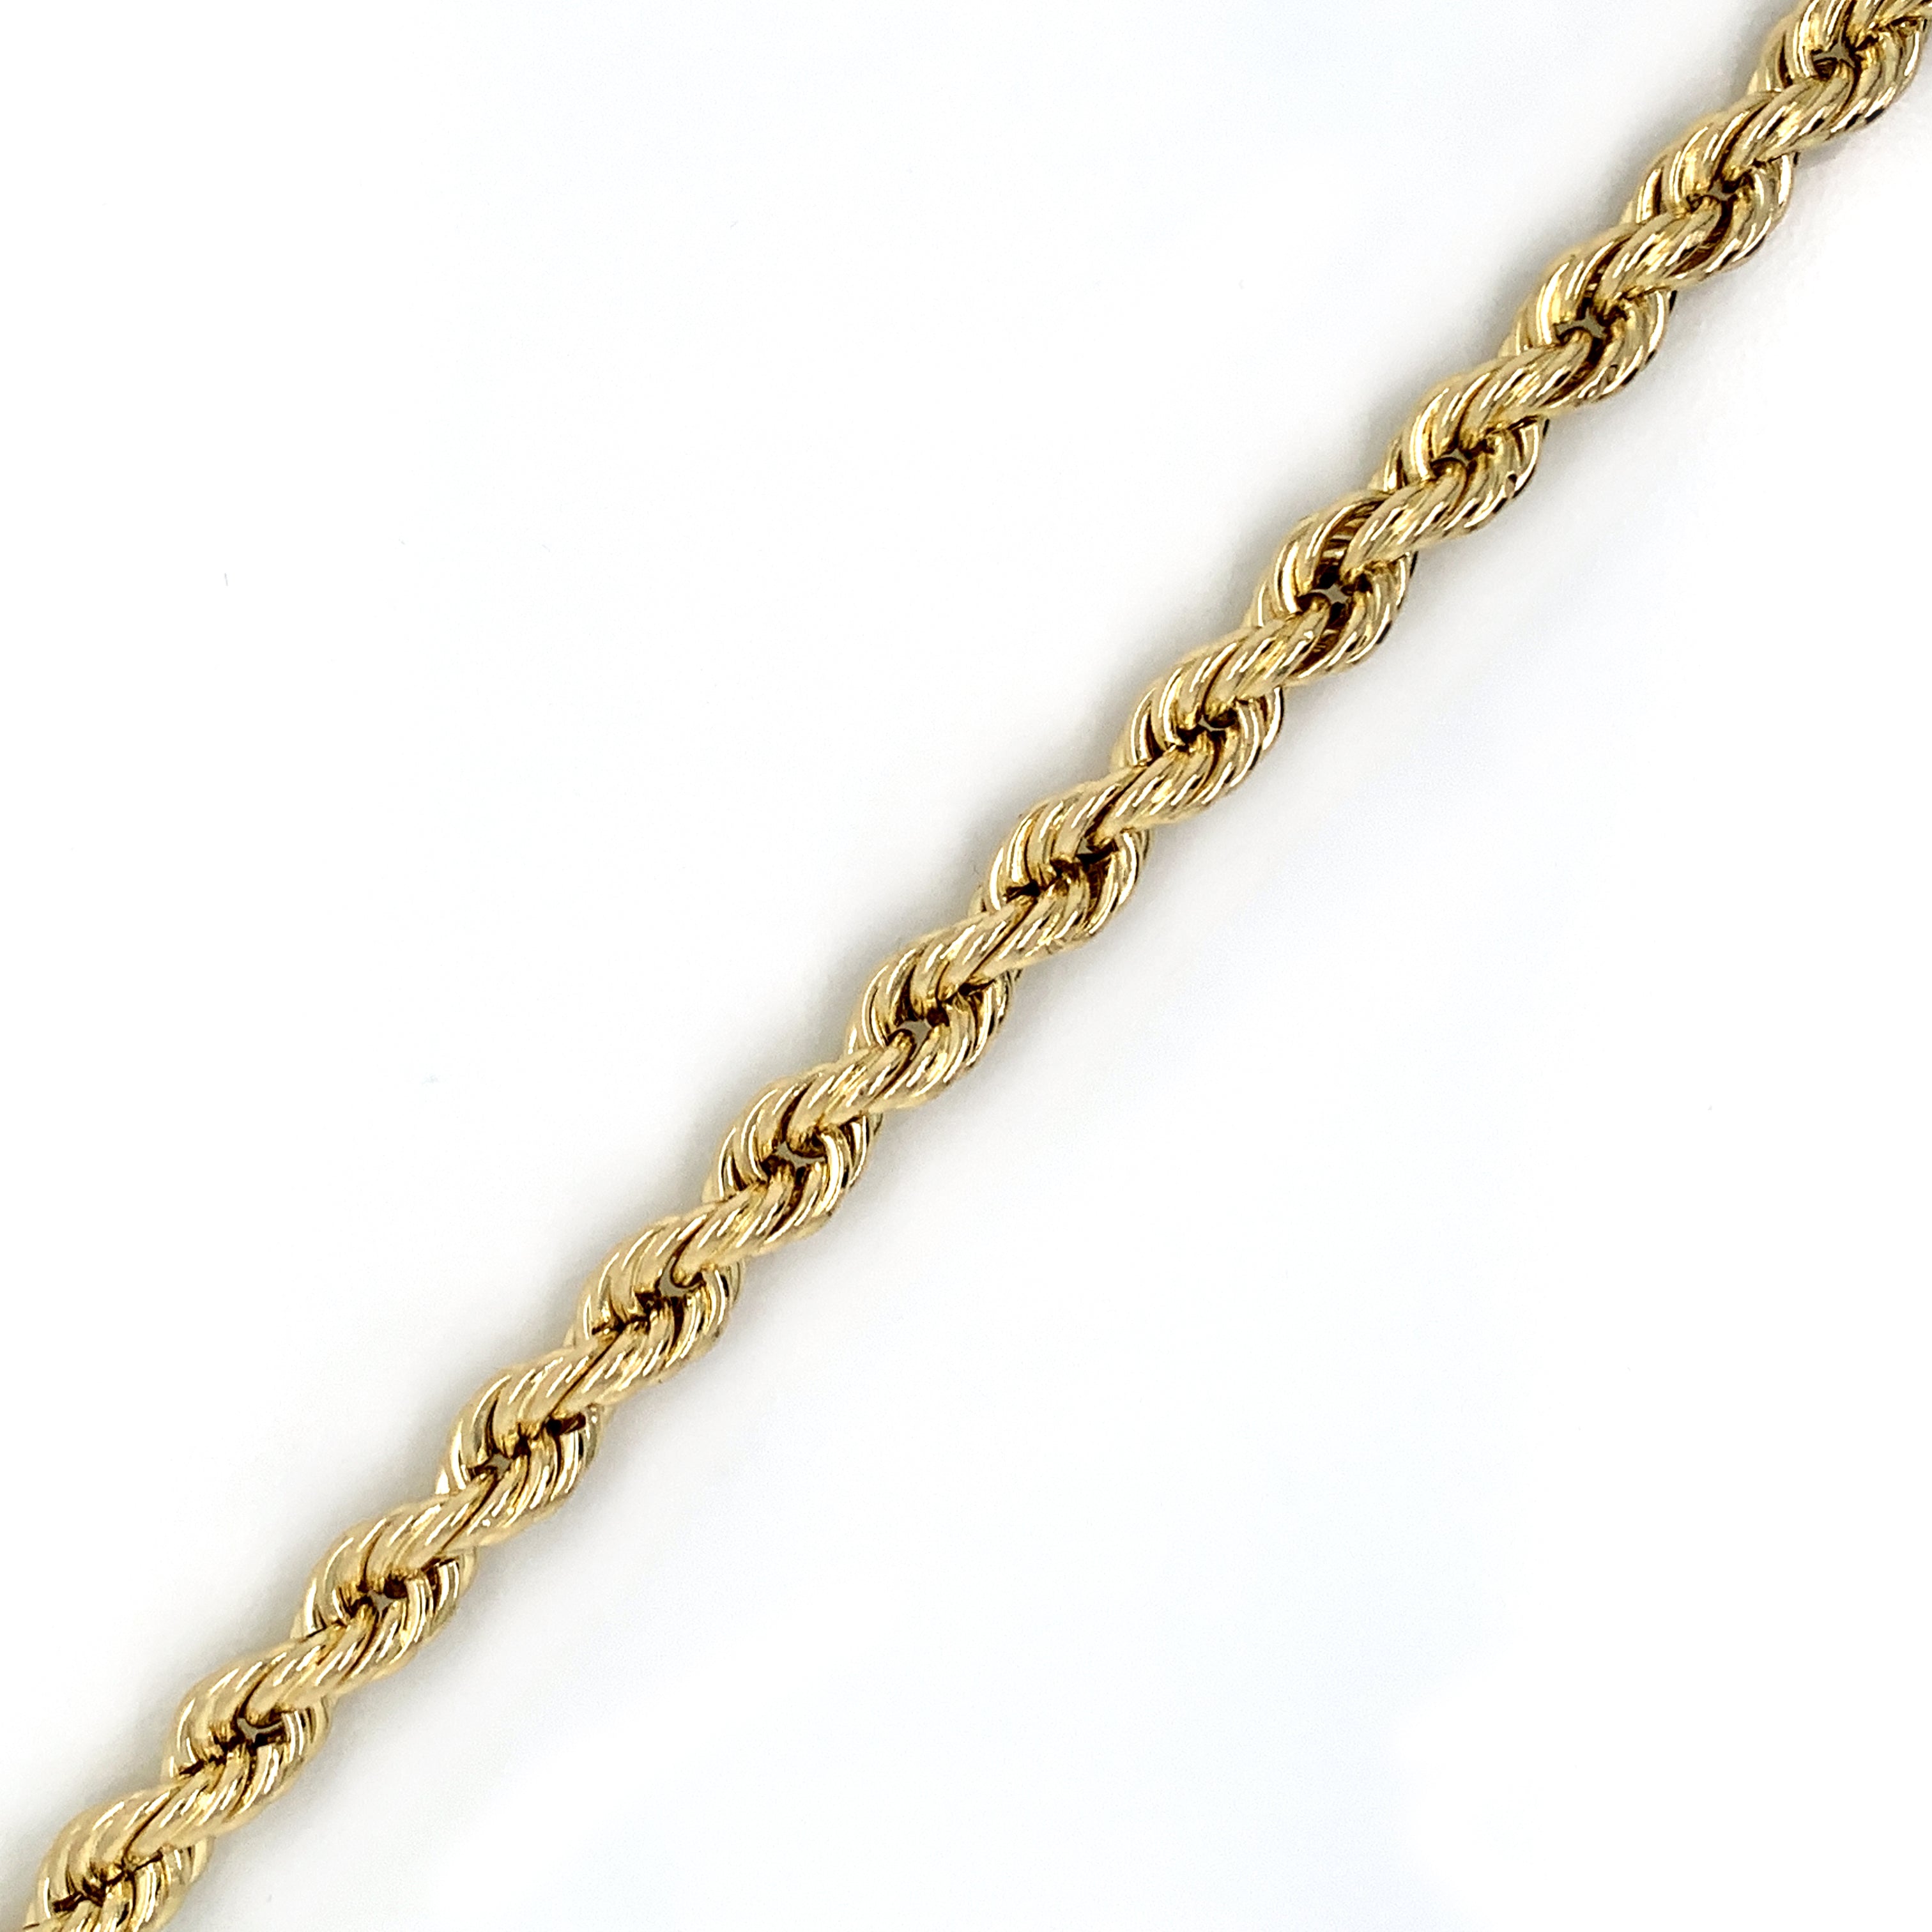 10mm Gold Rope Bracelet 10K - White Carat - USA & Canada